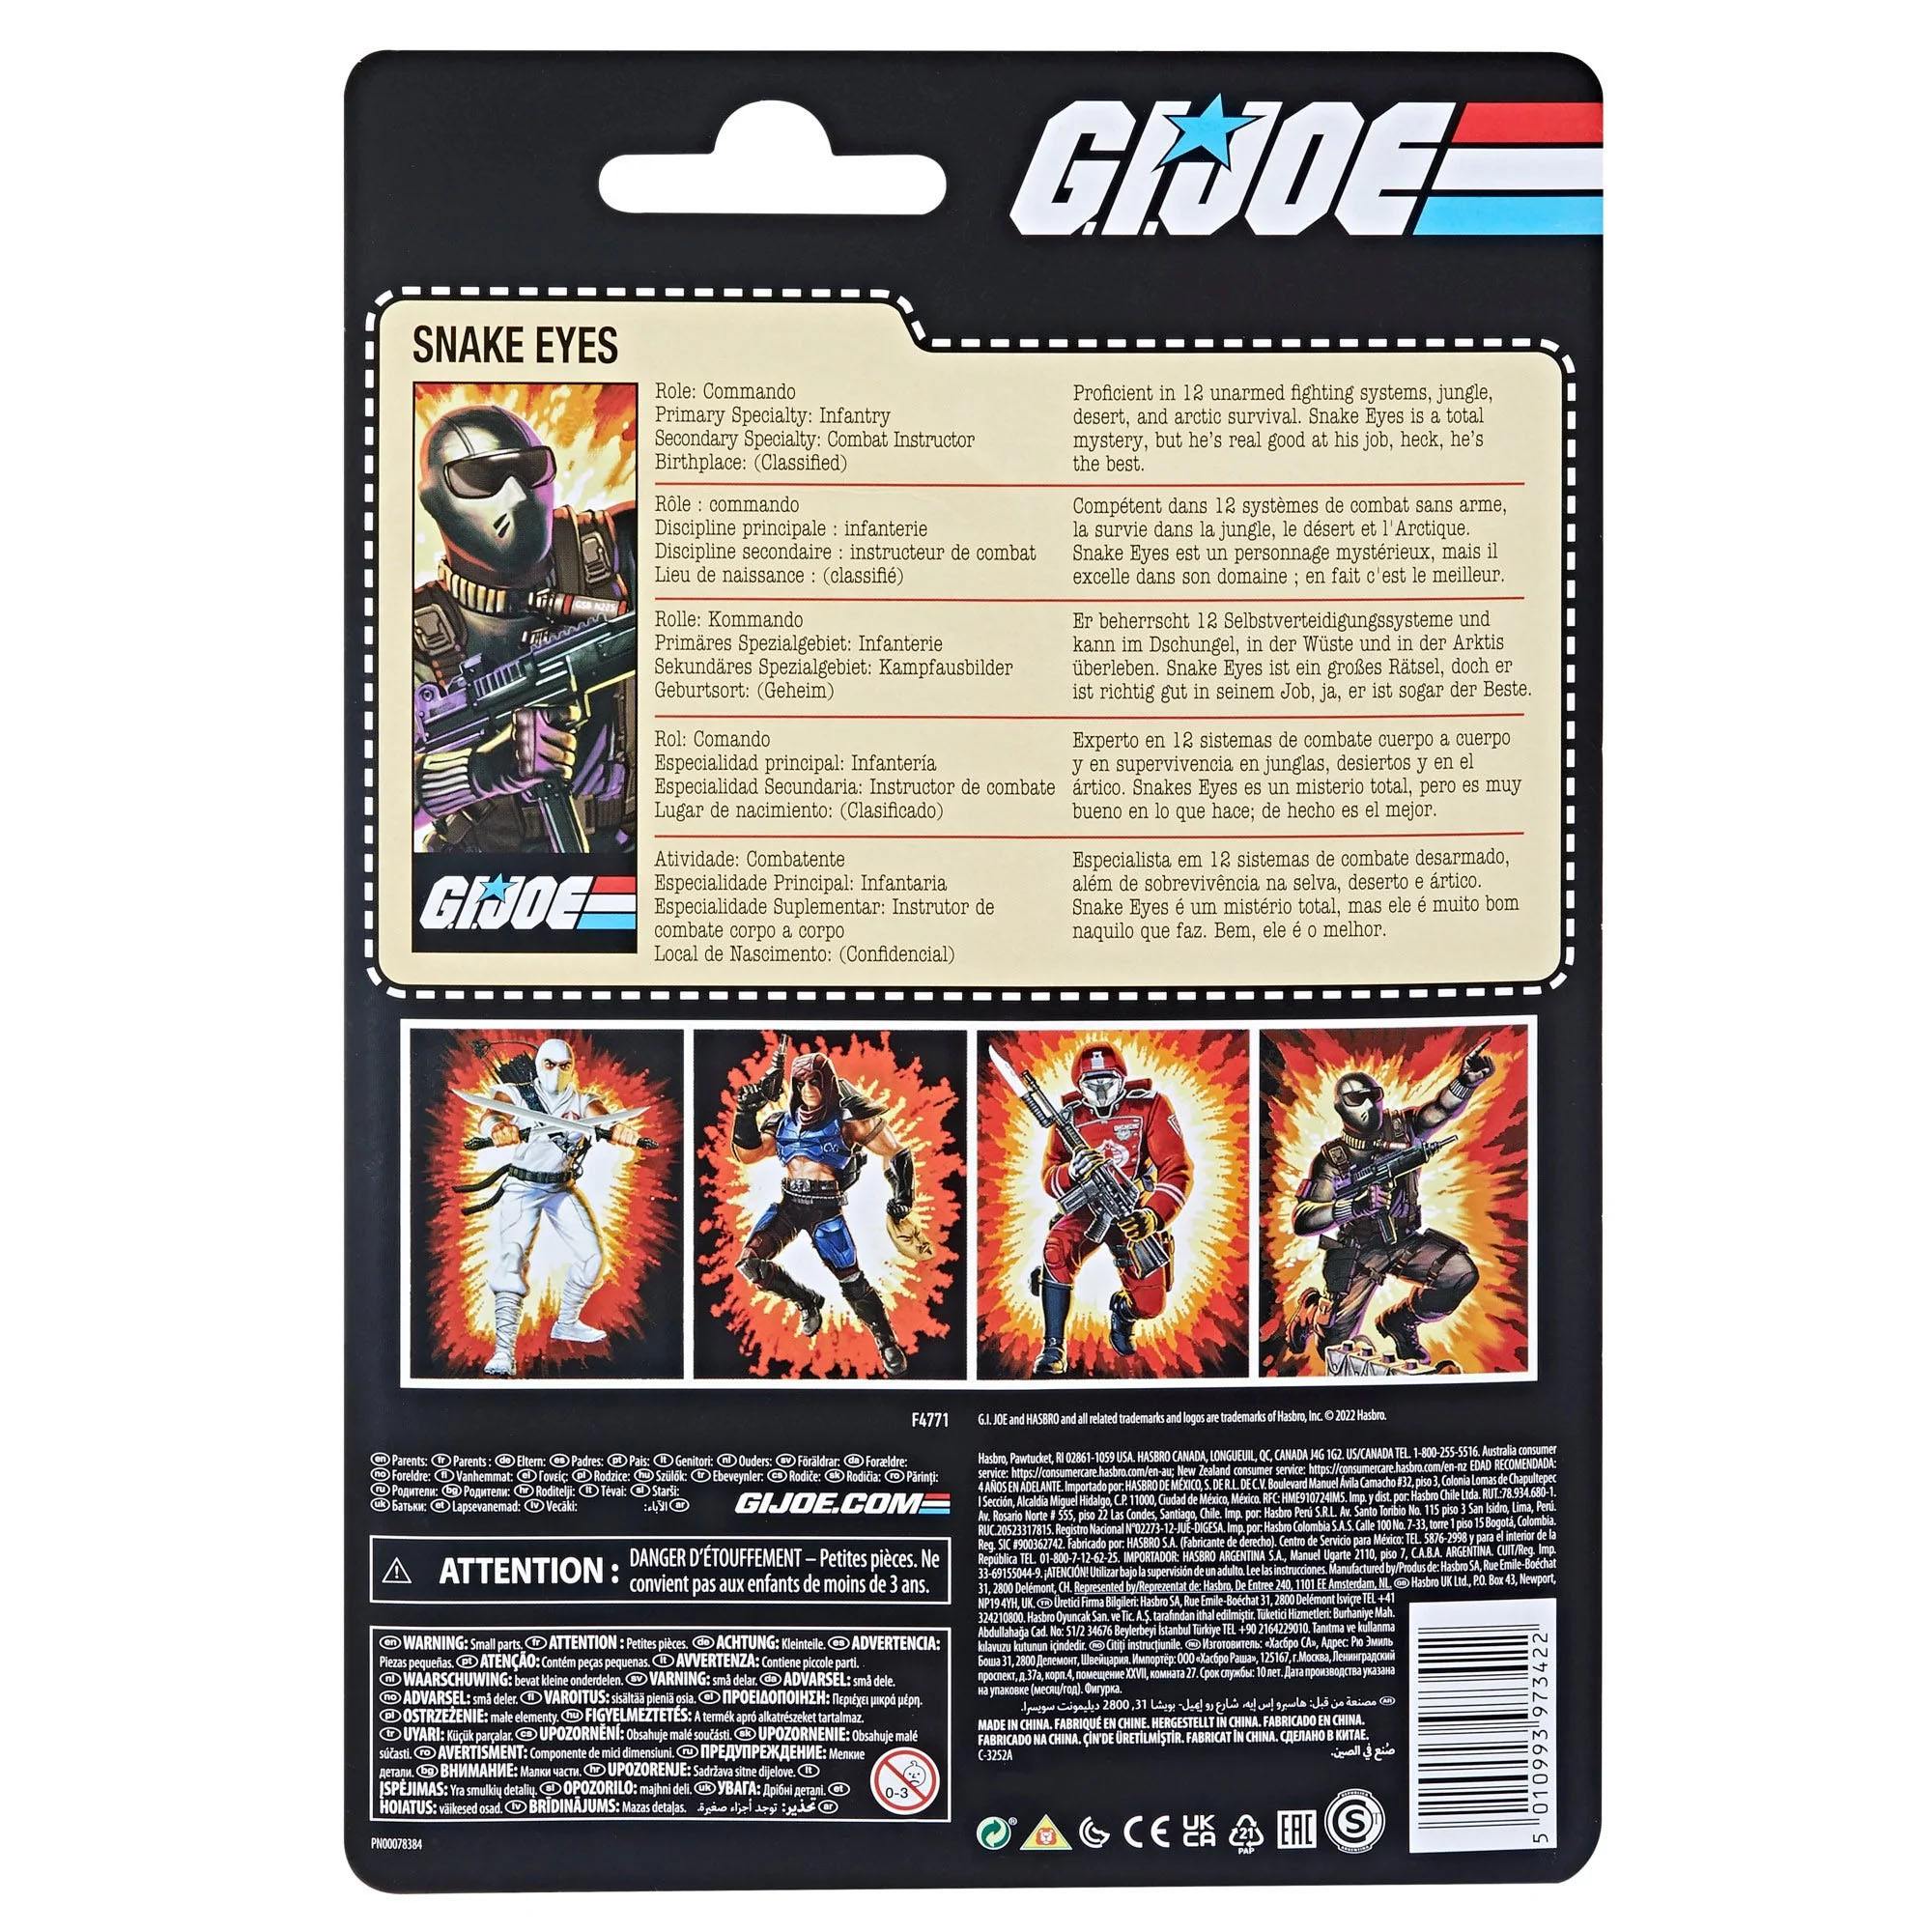 VP leicht beschädigt!!! G.I. Joe Retro Collection Actionfigur Snake Eyes 15 cm F47715X0 5010993973422